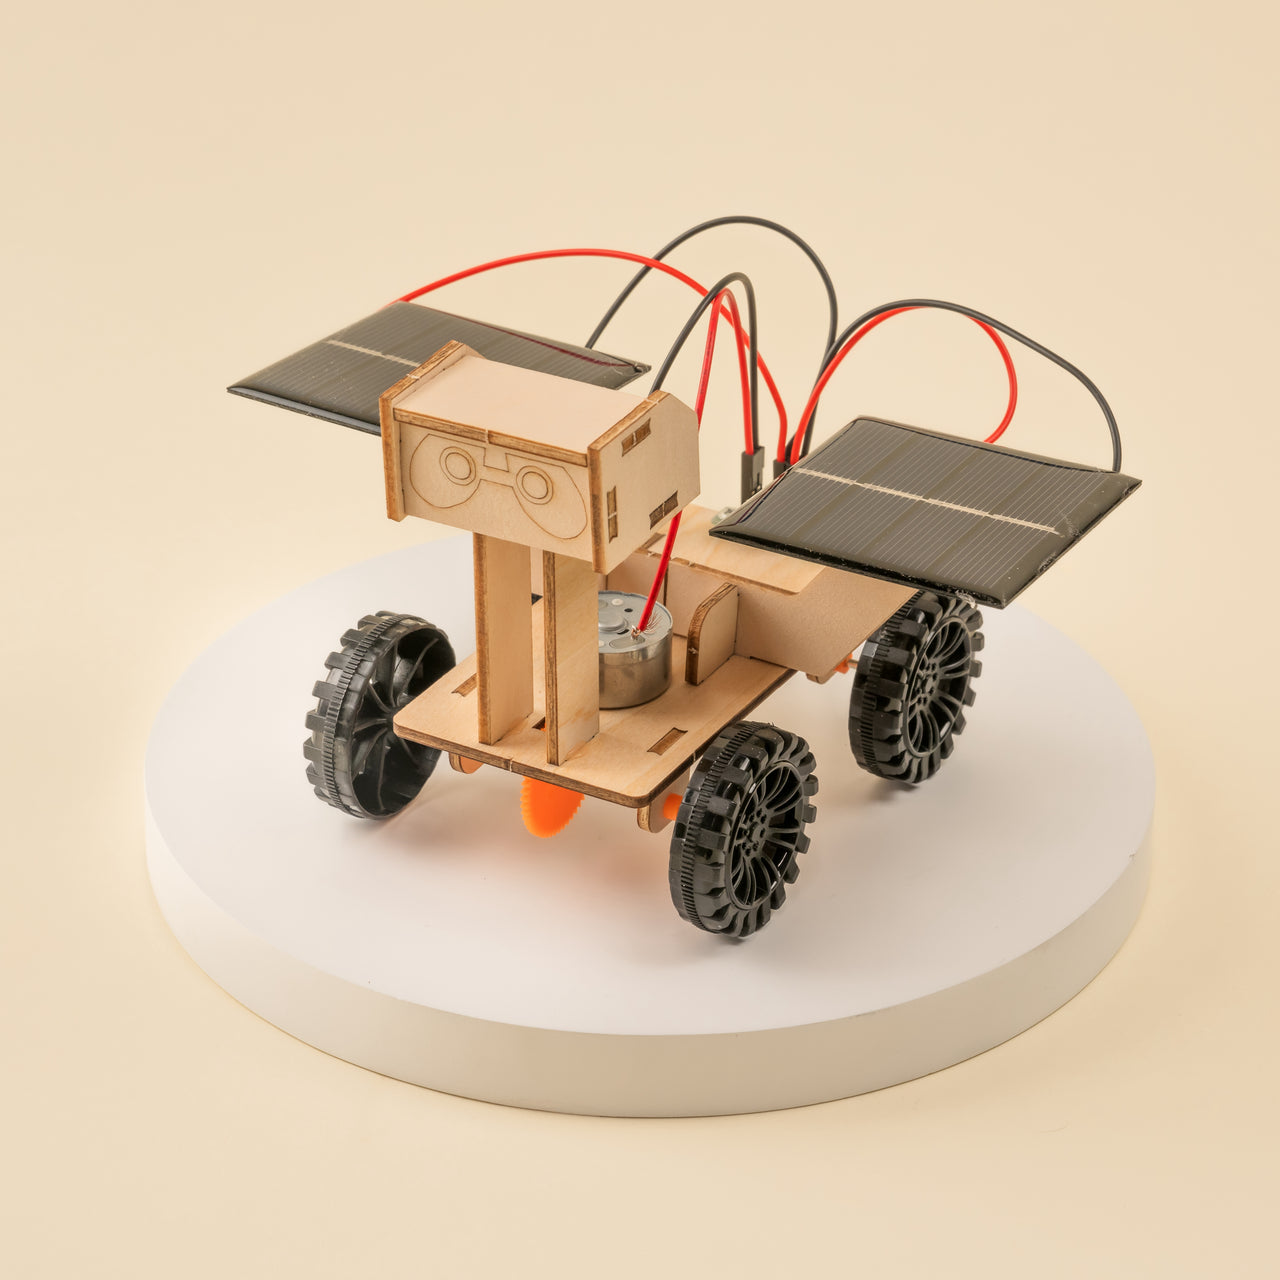 CreateKit Solar Powered Mars Exploration Rover DIY Kit